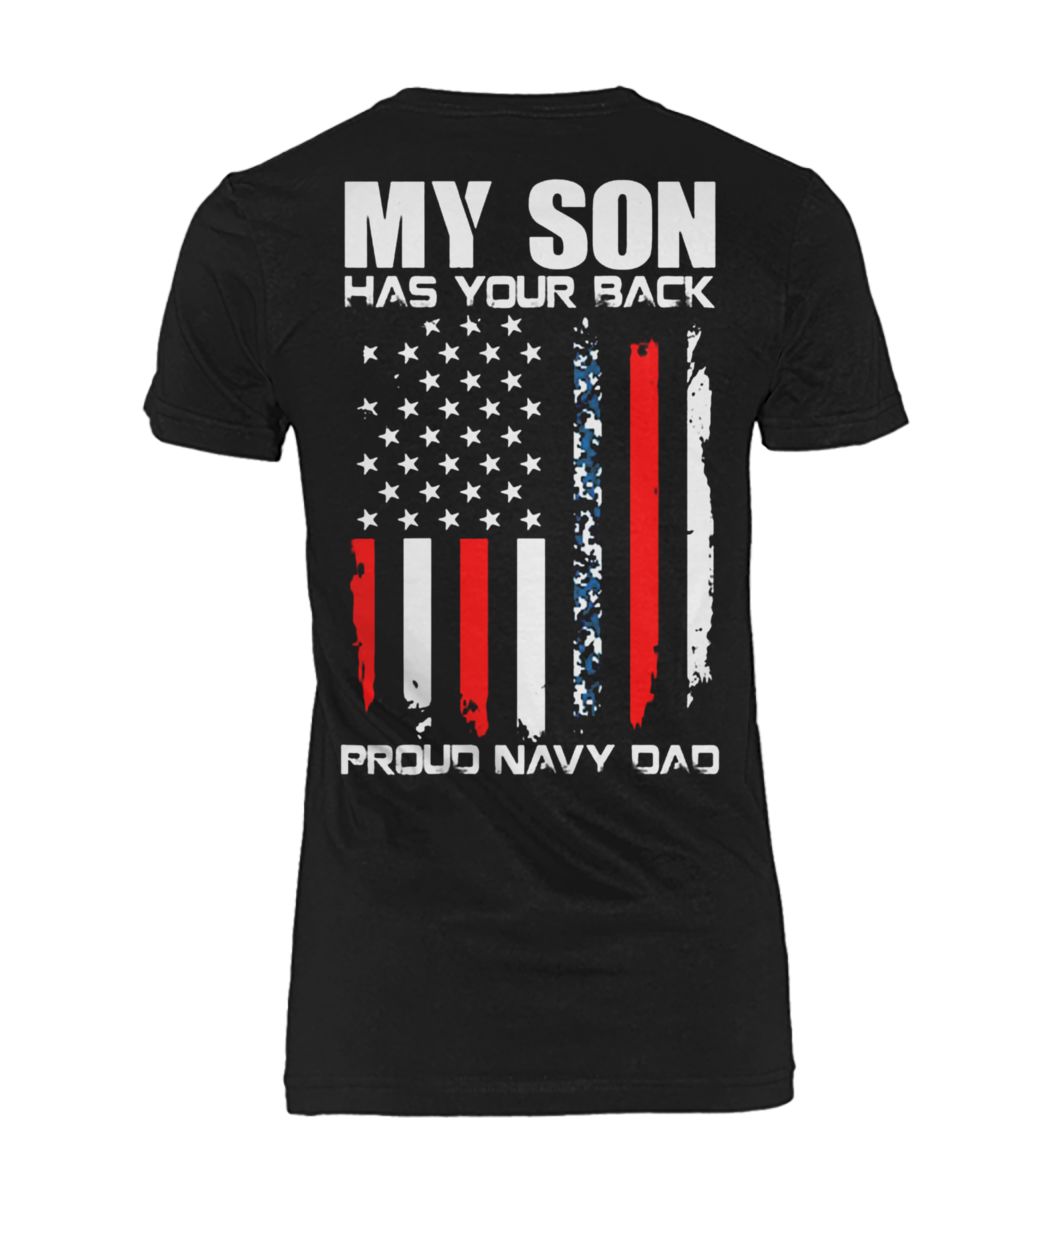 My son has your back proud navy dad women's crew tee